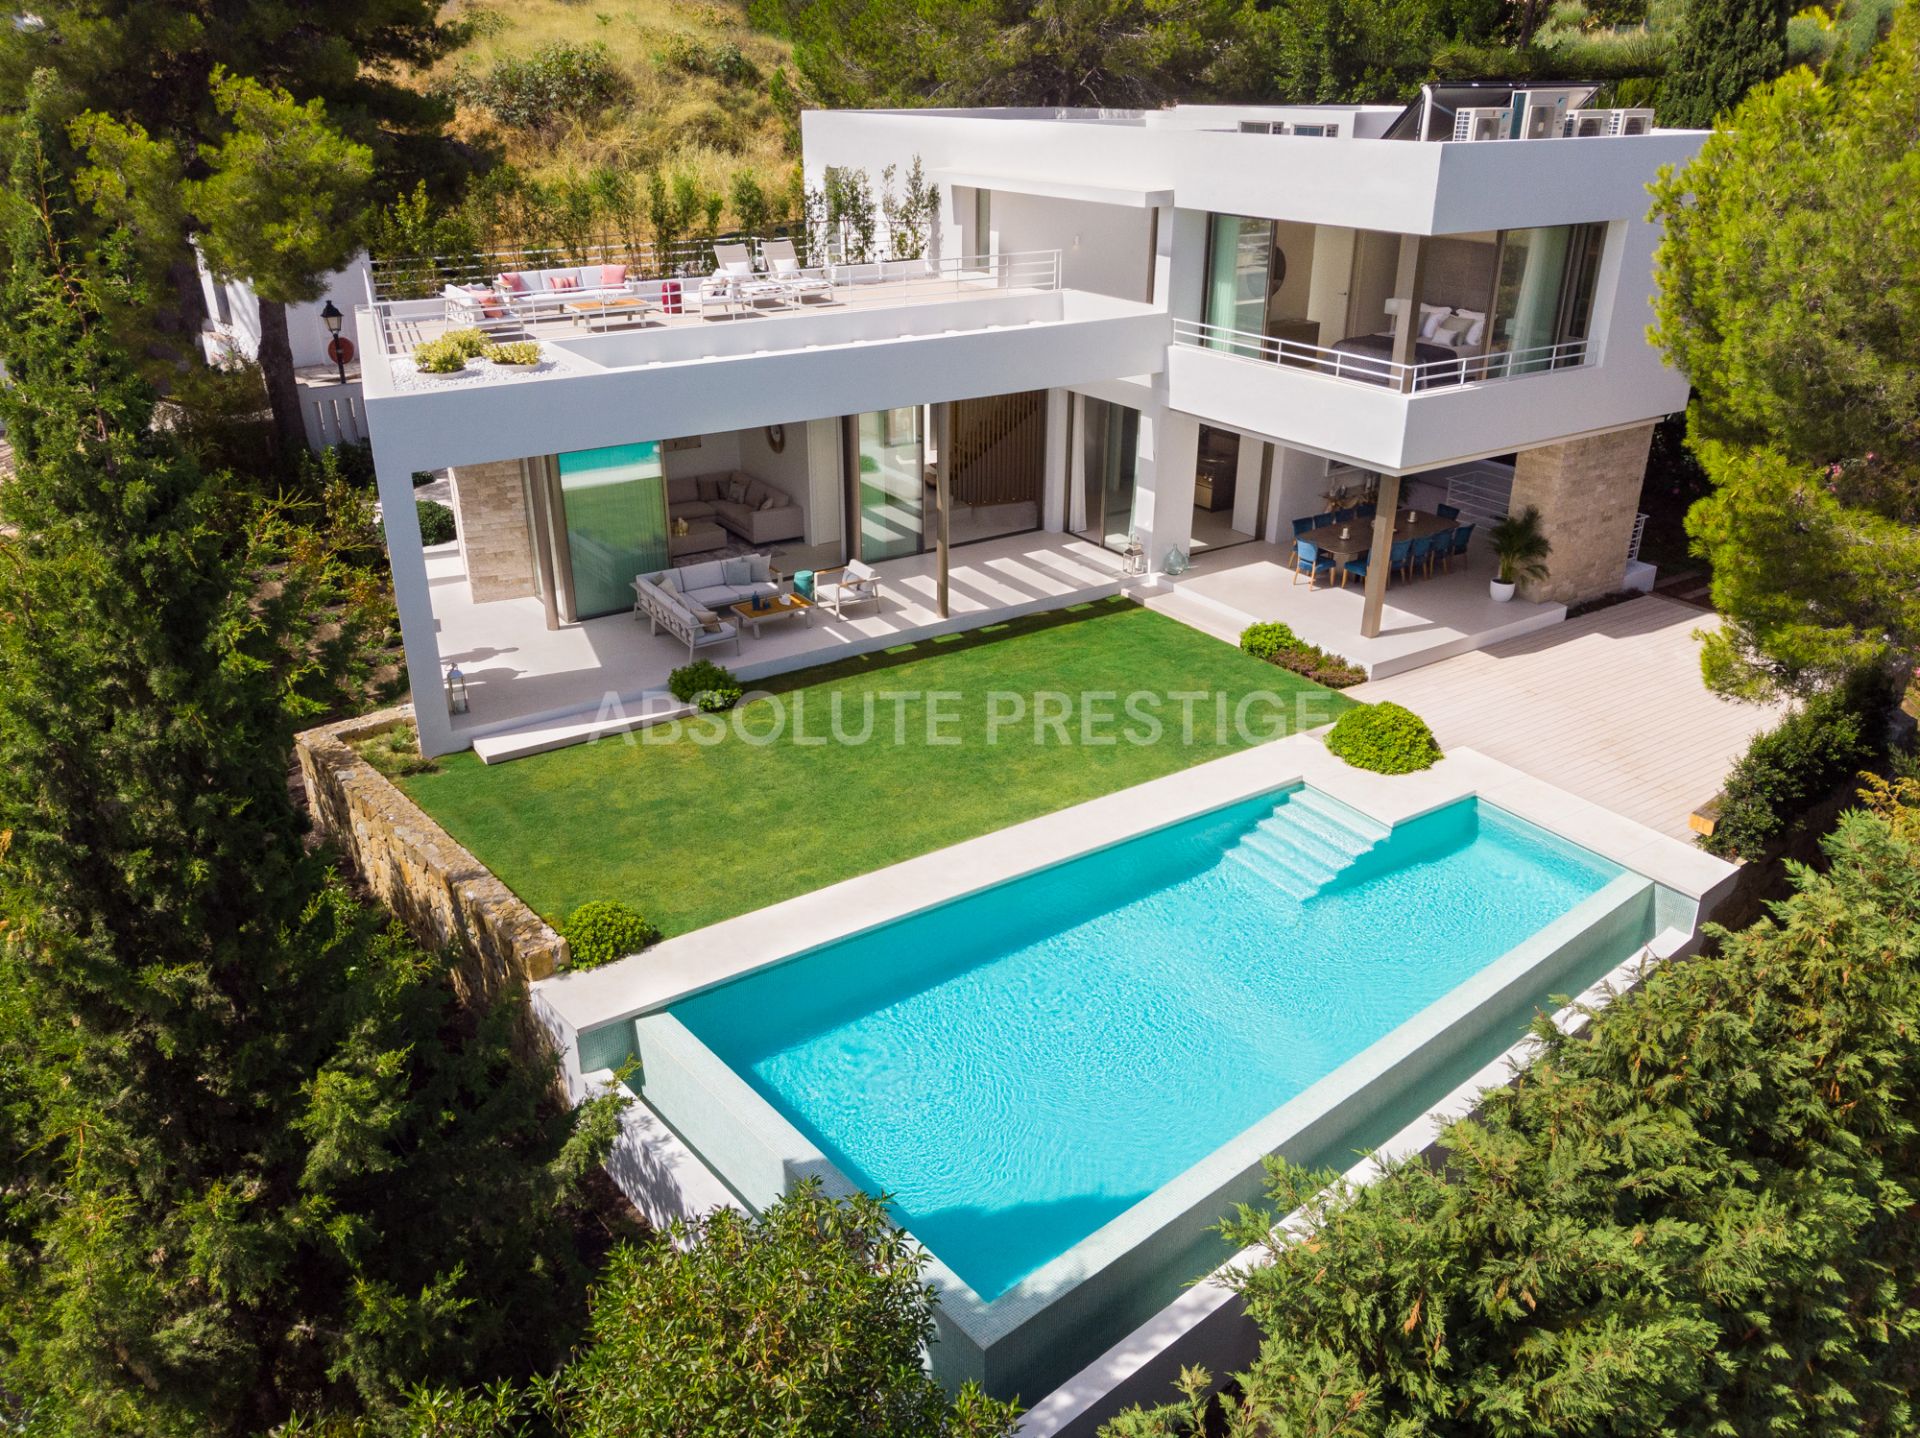 Stunning 4 bedroom villa ideally located in the heart of Nueva Andalucía’s Golf Valley